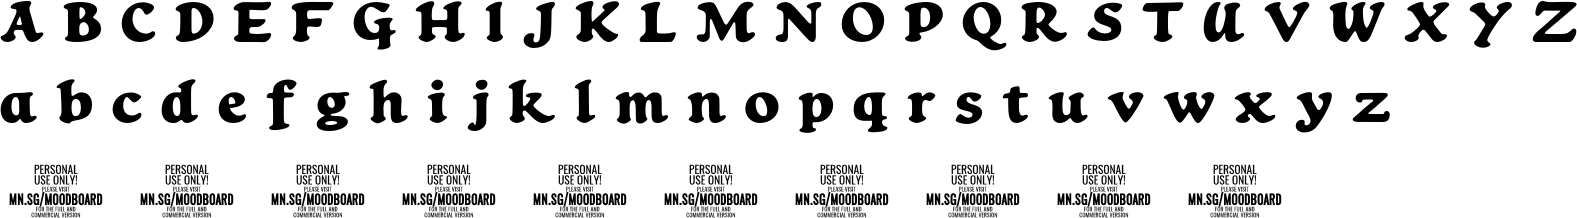 Moodboard Font Character Map